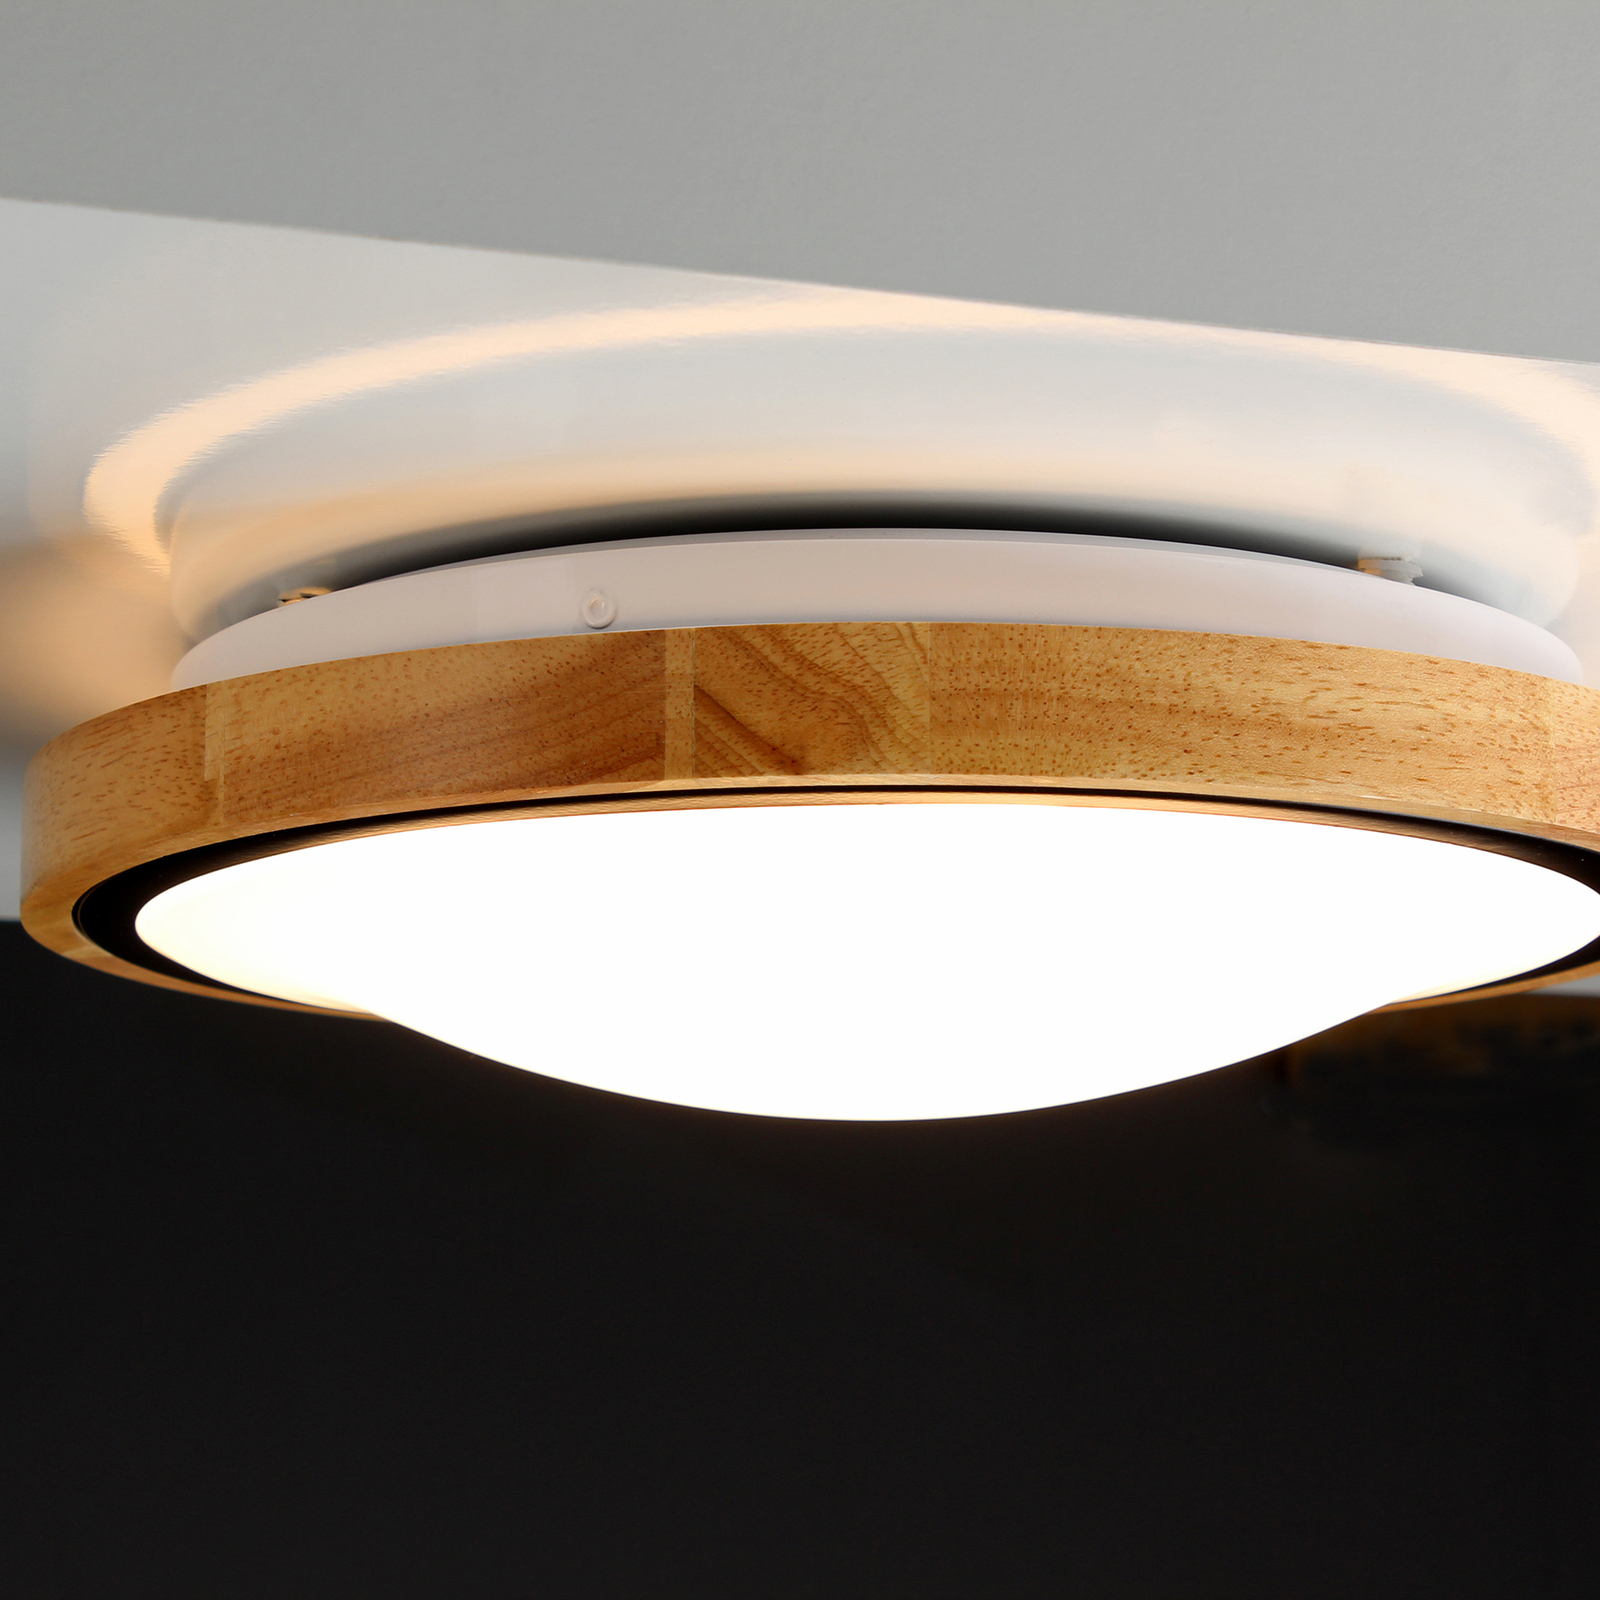 Plafonnier LED Solstar avec décor bois Ø 30,7 cm